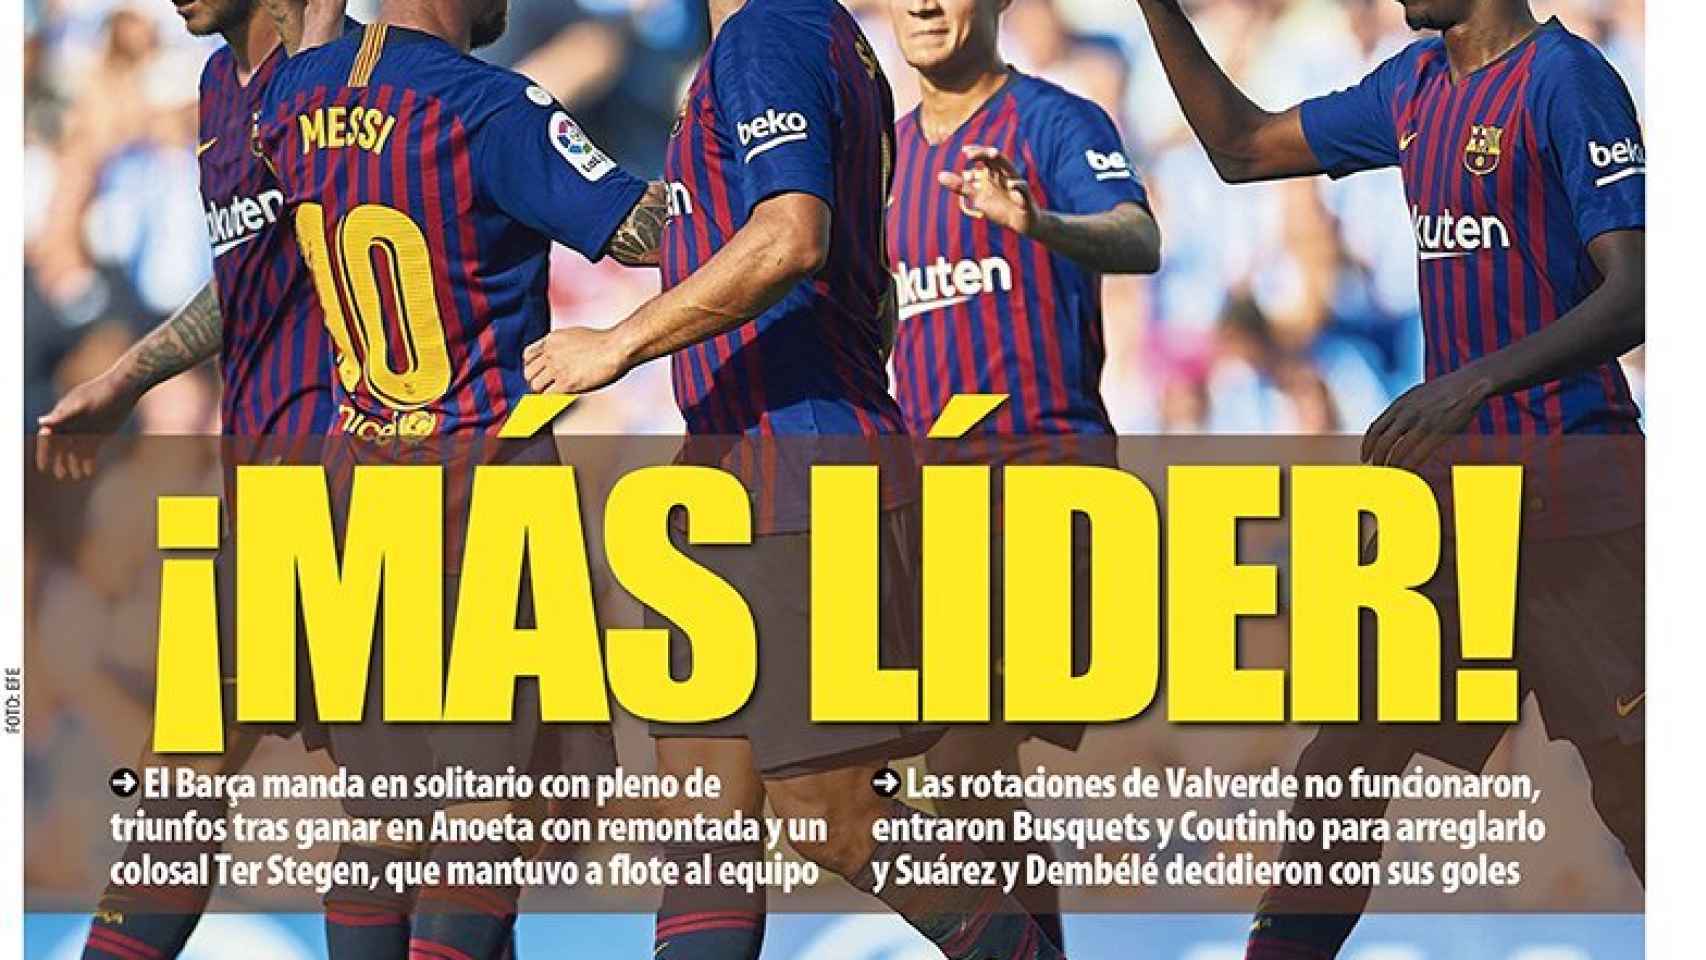 La portada del diario Mundo Deportivo (16/09/2018)1706 x 960